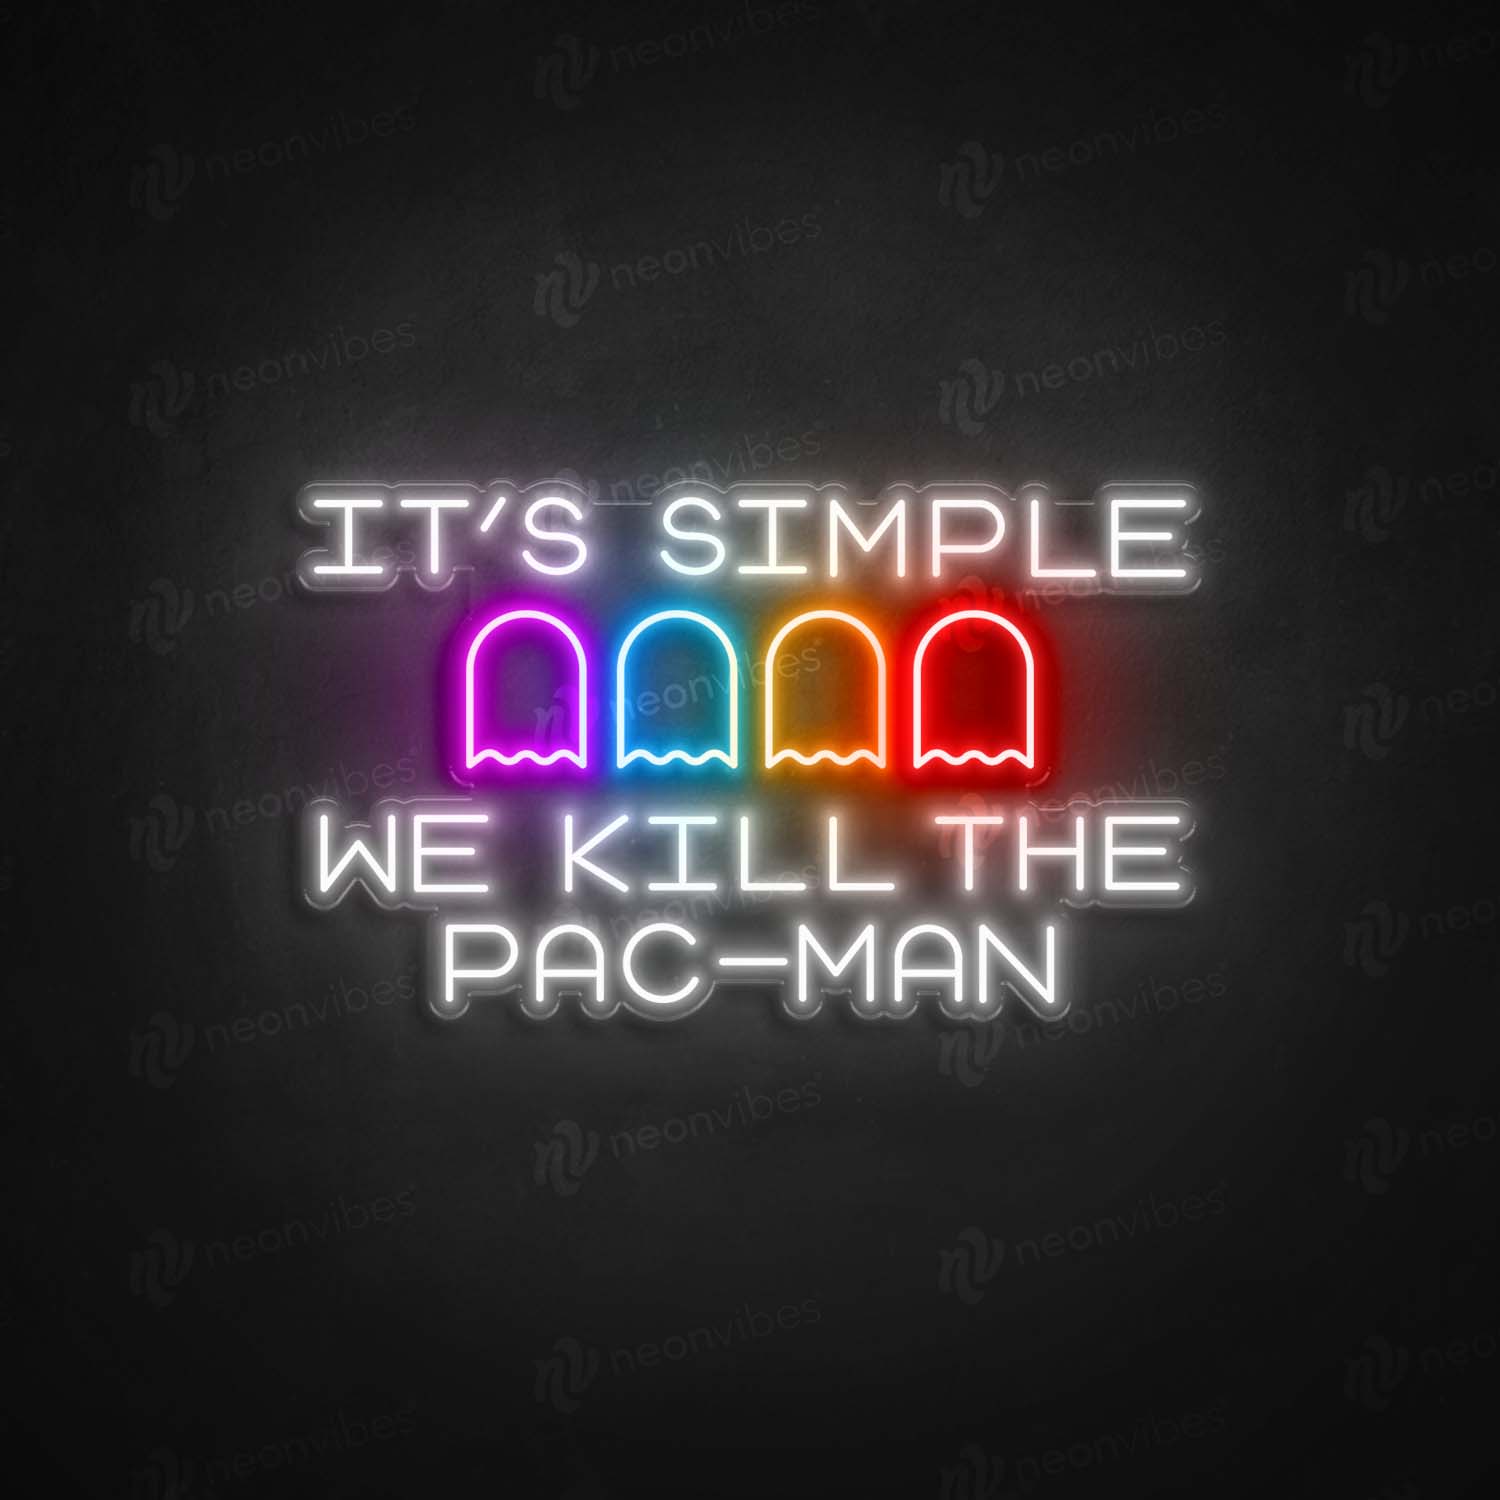 Pac man neon sign